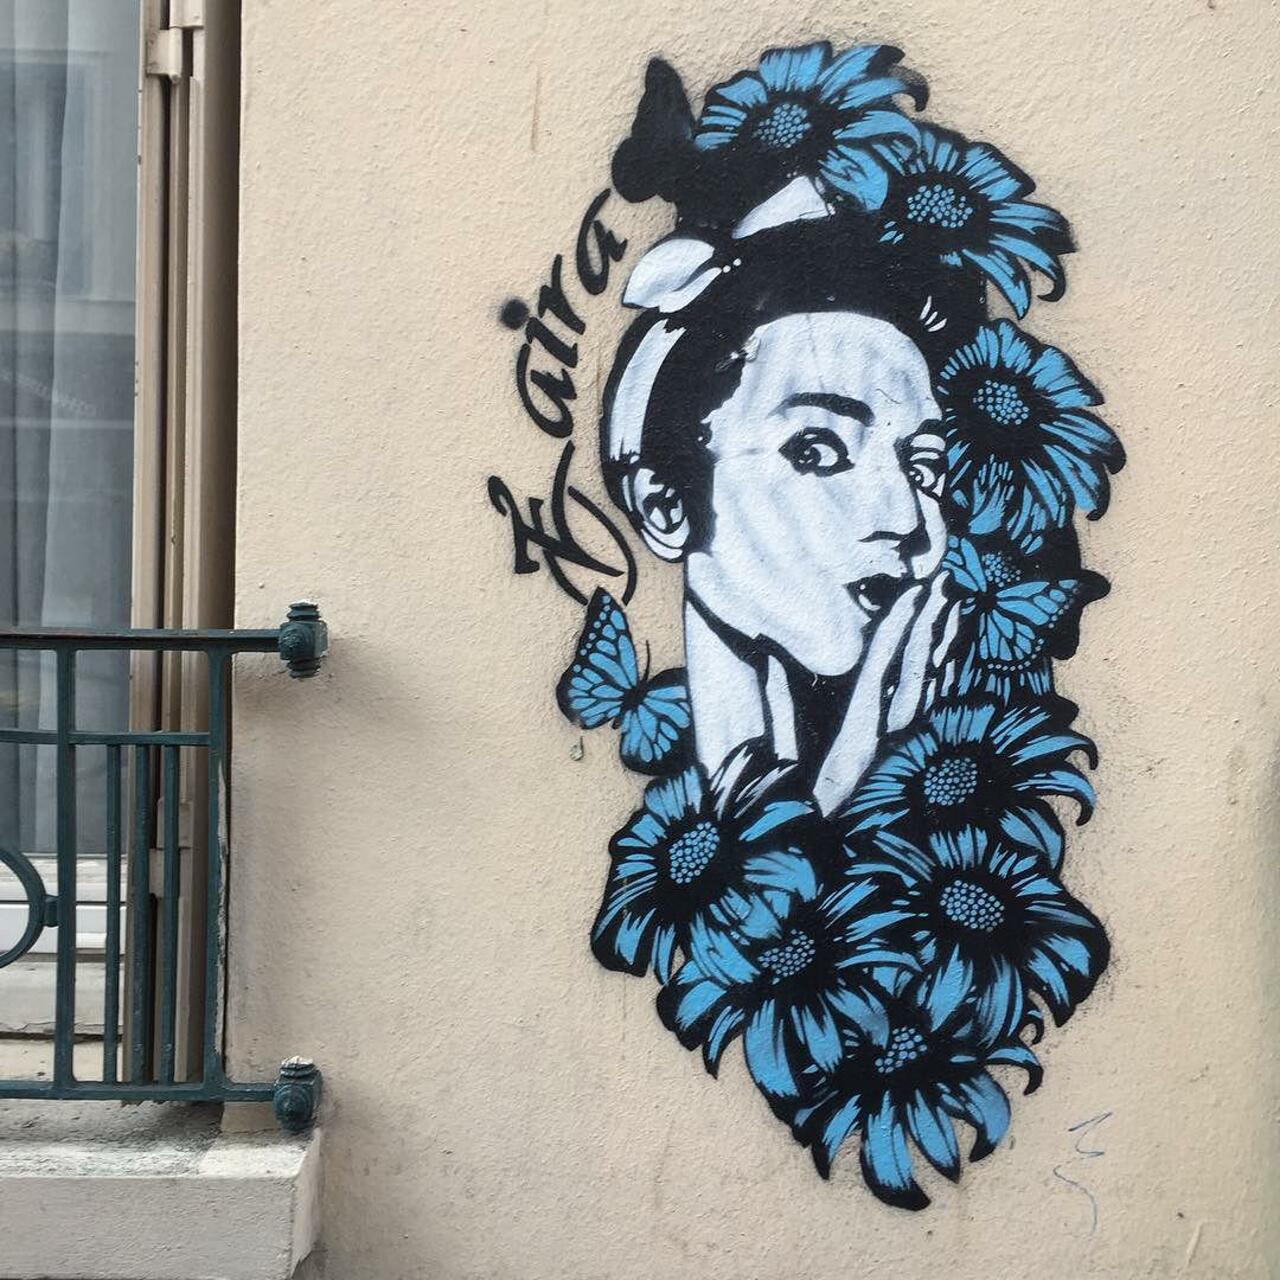 #Paris #graffiti photo by @catscoffeecreativity http://ift.tt/1Ka33sP #StreetArt http://t.co/Fp6GLdqCmr